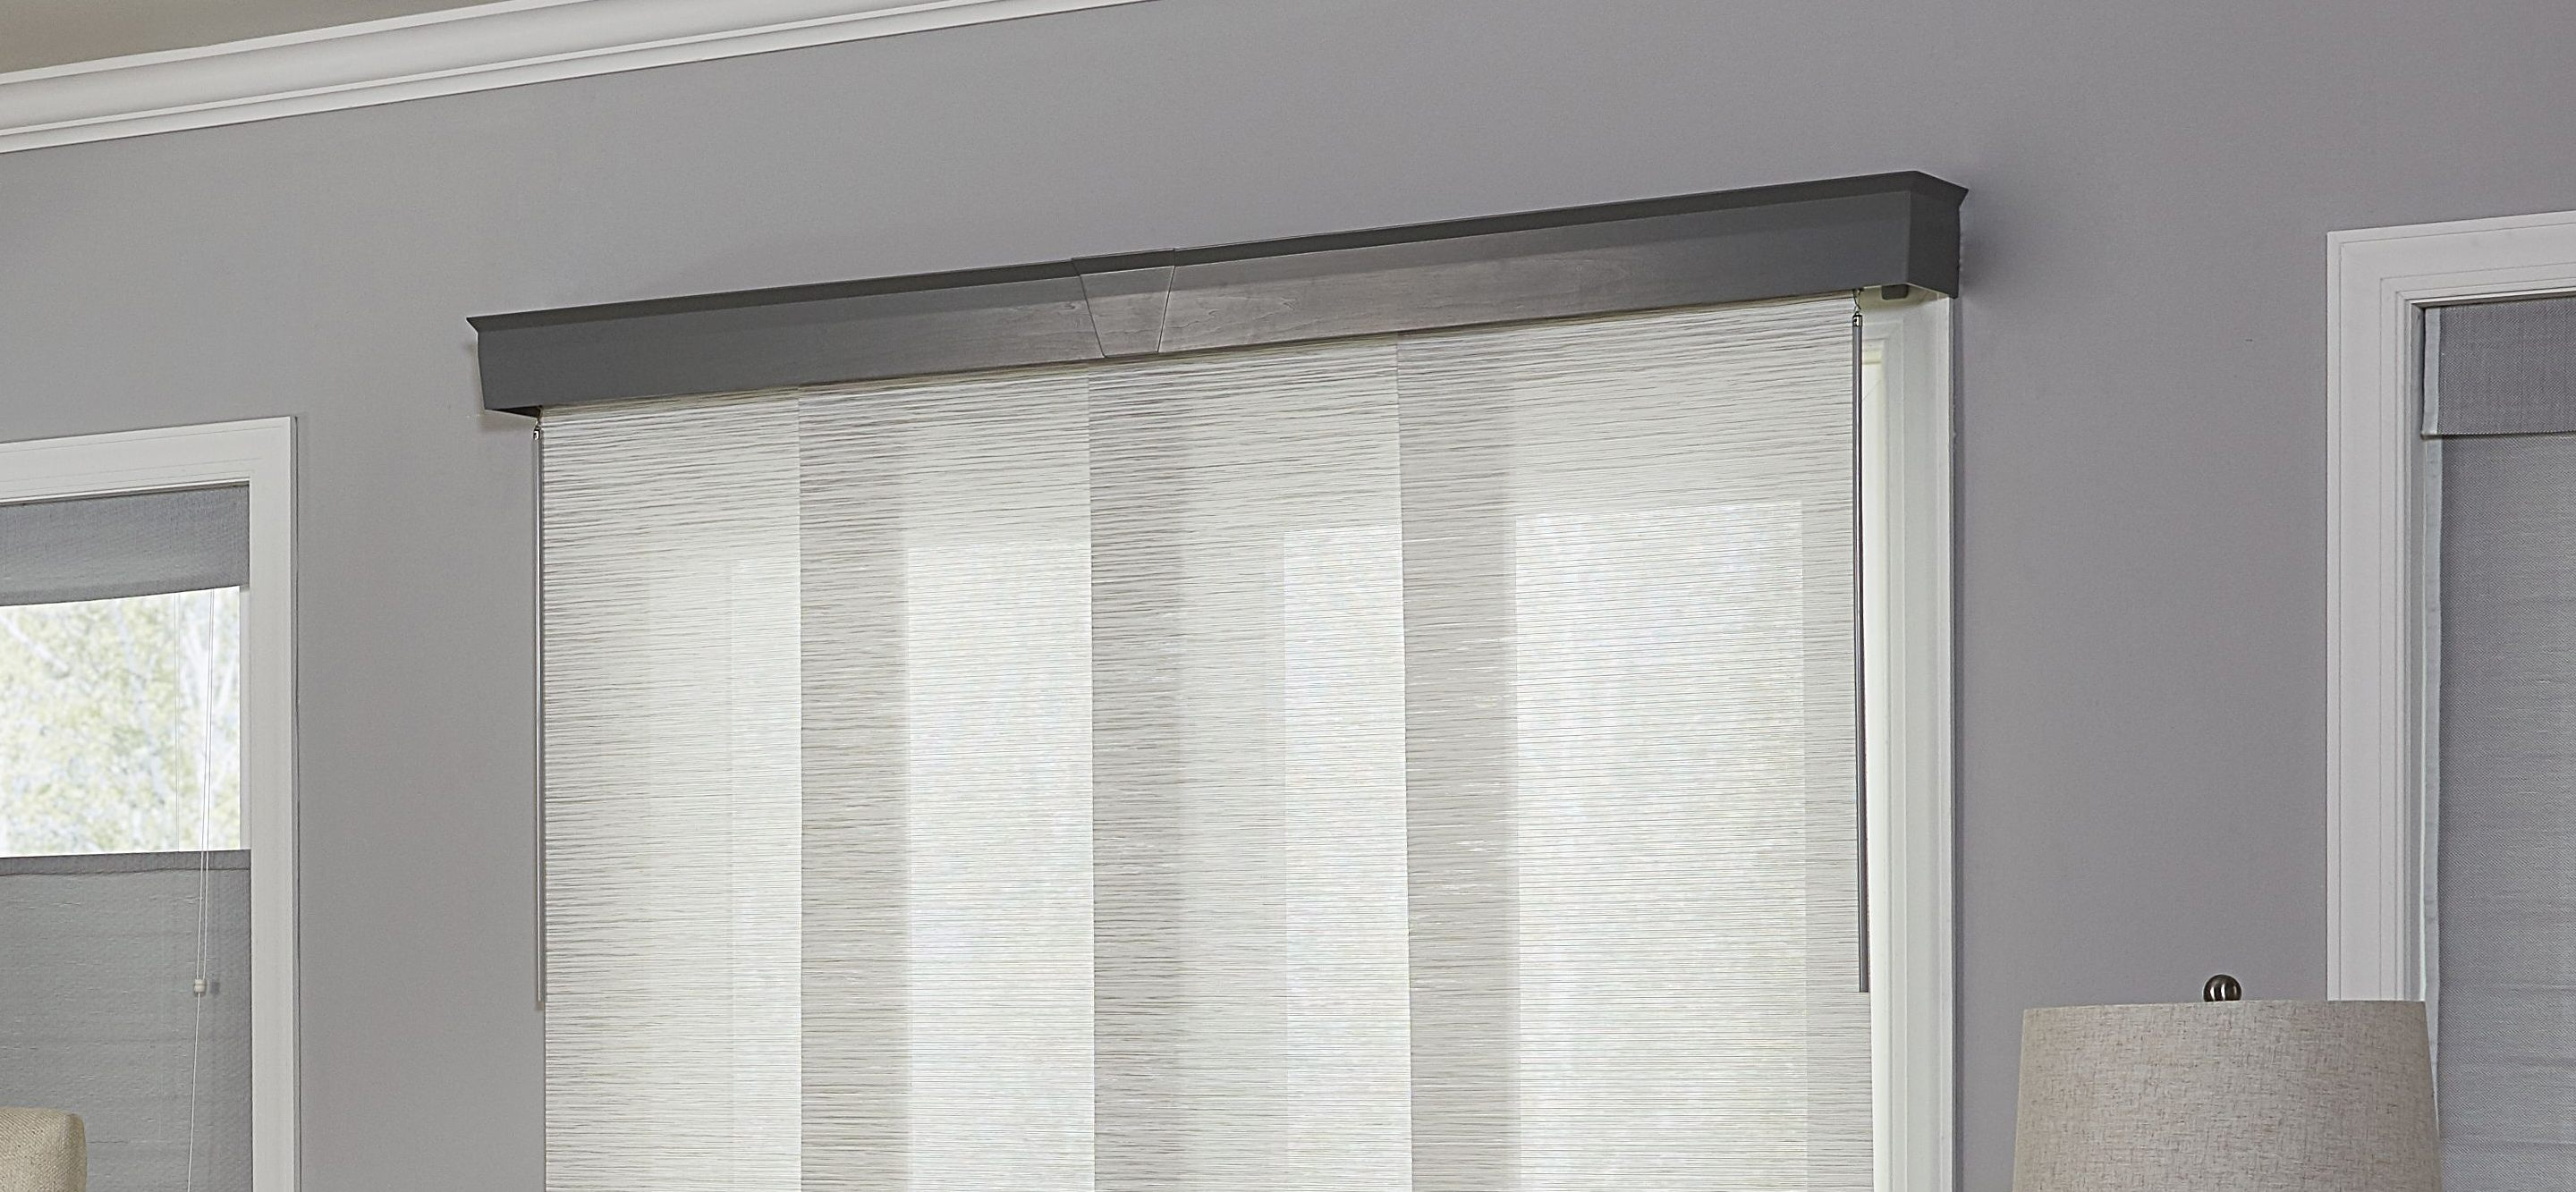 The Best Vertical Blinds Alternatives For Sliding Glass Doors intended for dimensions 2880 X 1333